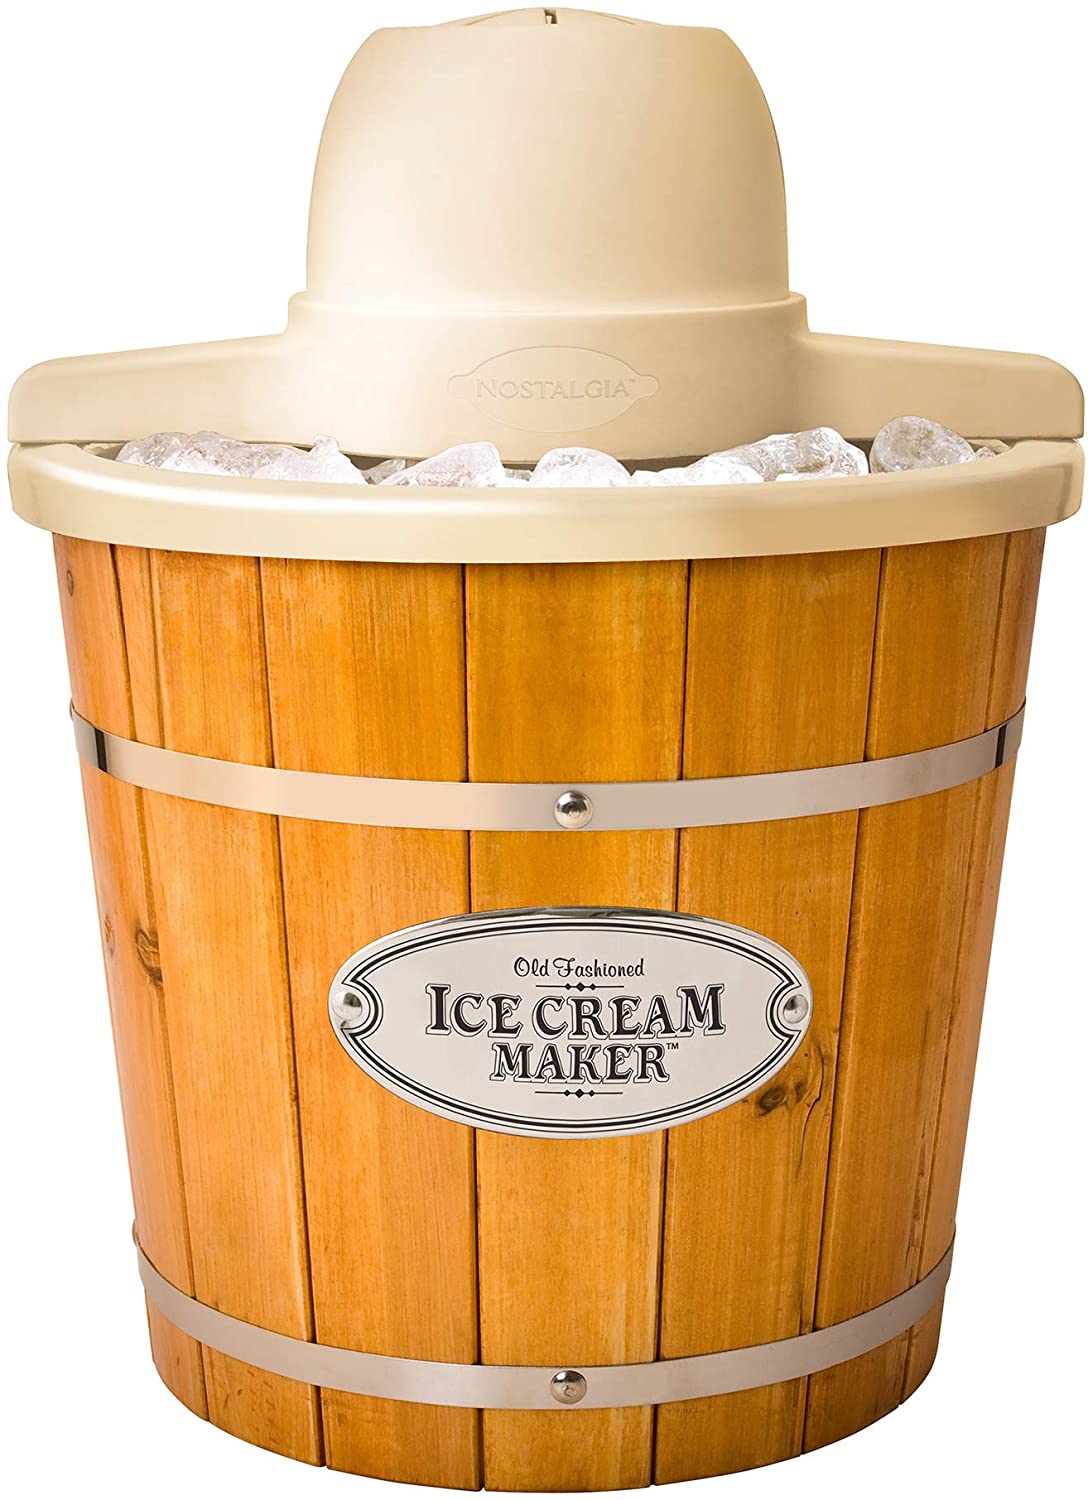 Nostalgia Electrics Ice Cream Maker, Makes 4-Quarts of Ice Cream, Frozen Yogurt or Gelato in Minutes, Real Wood Bucket, Light